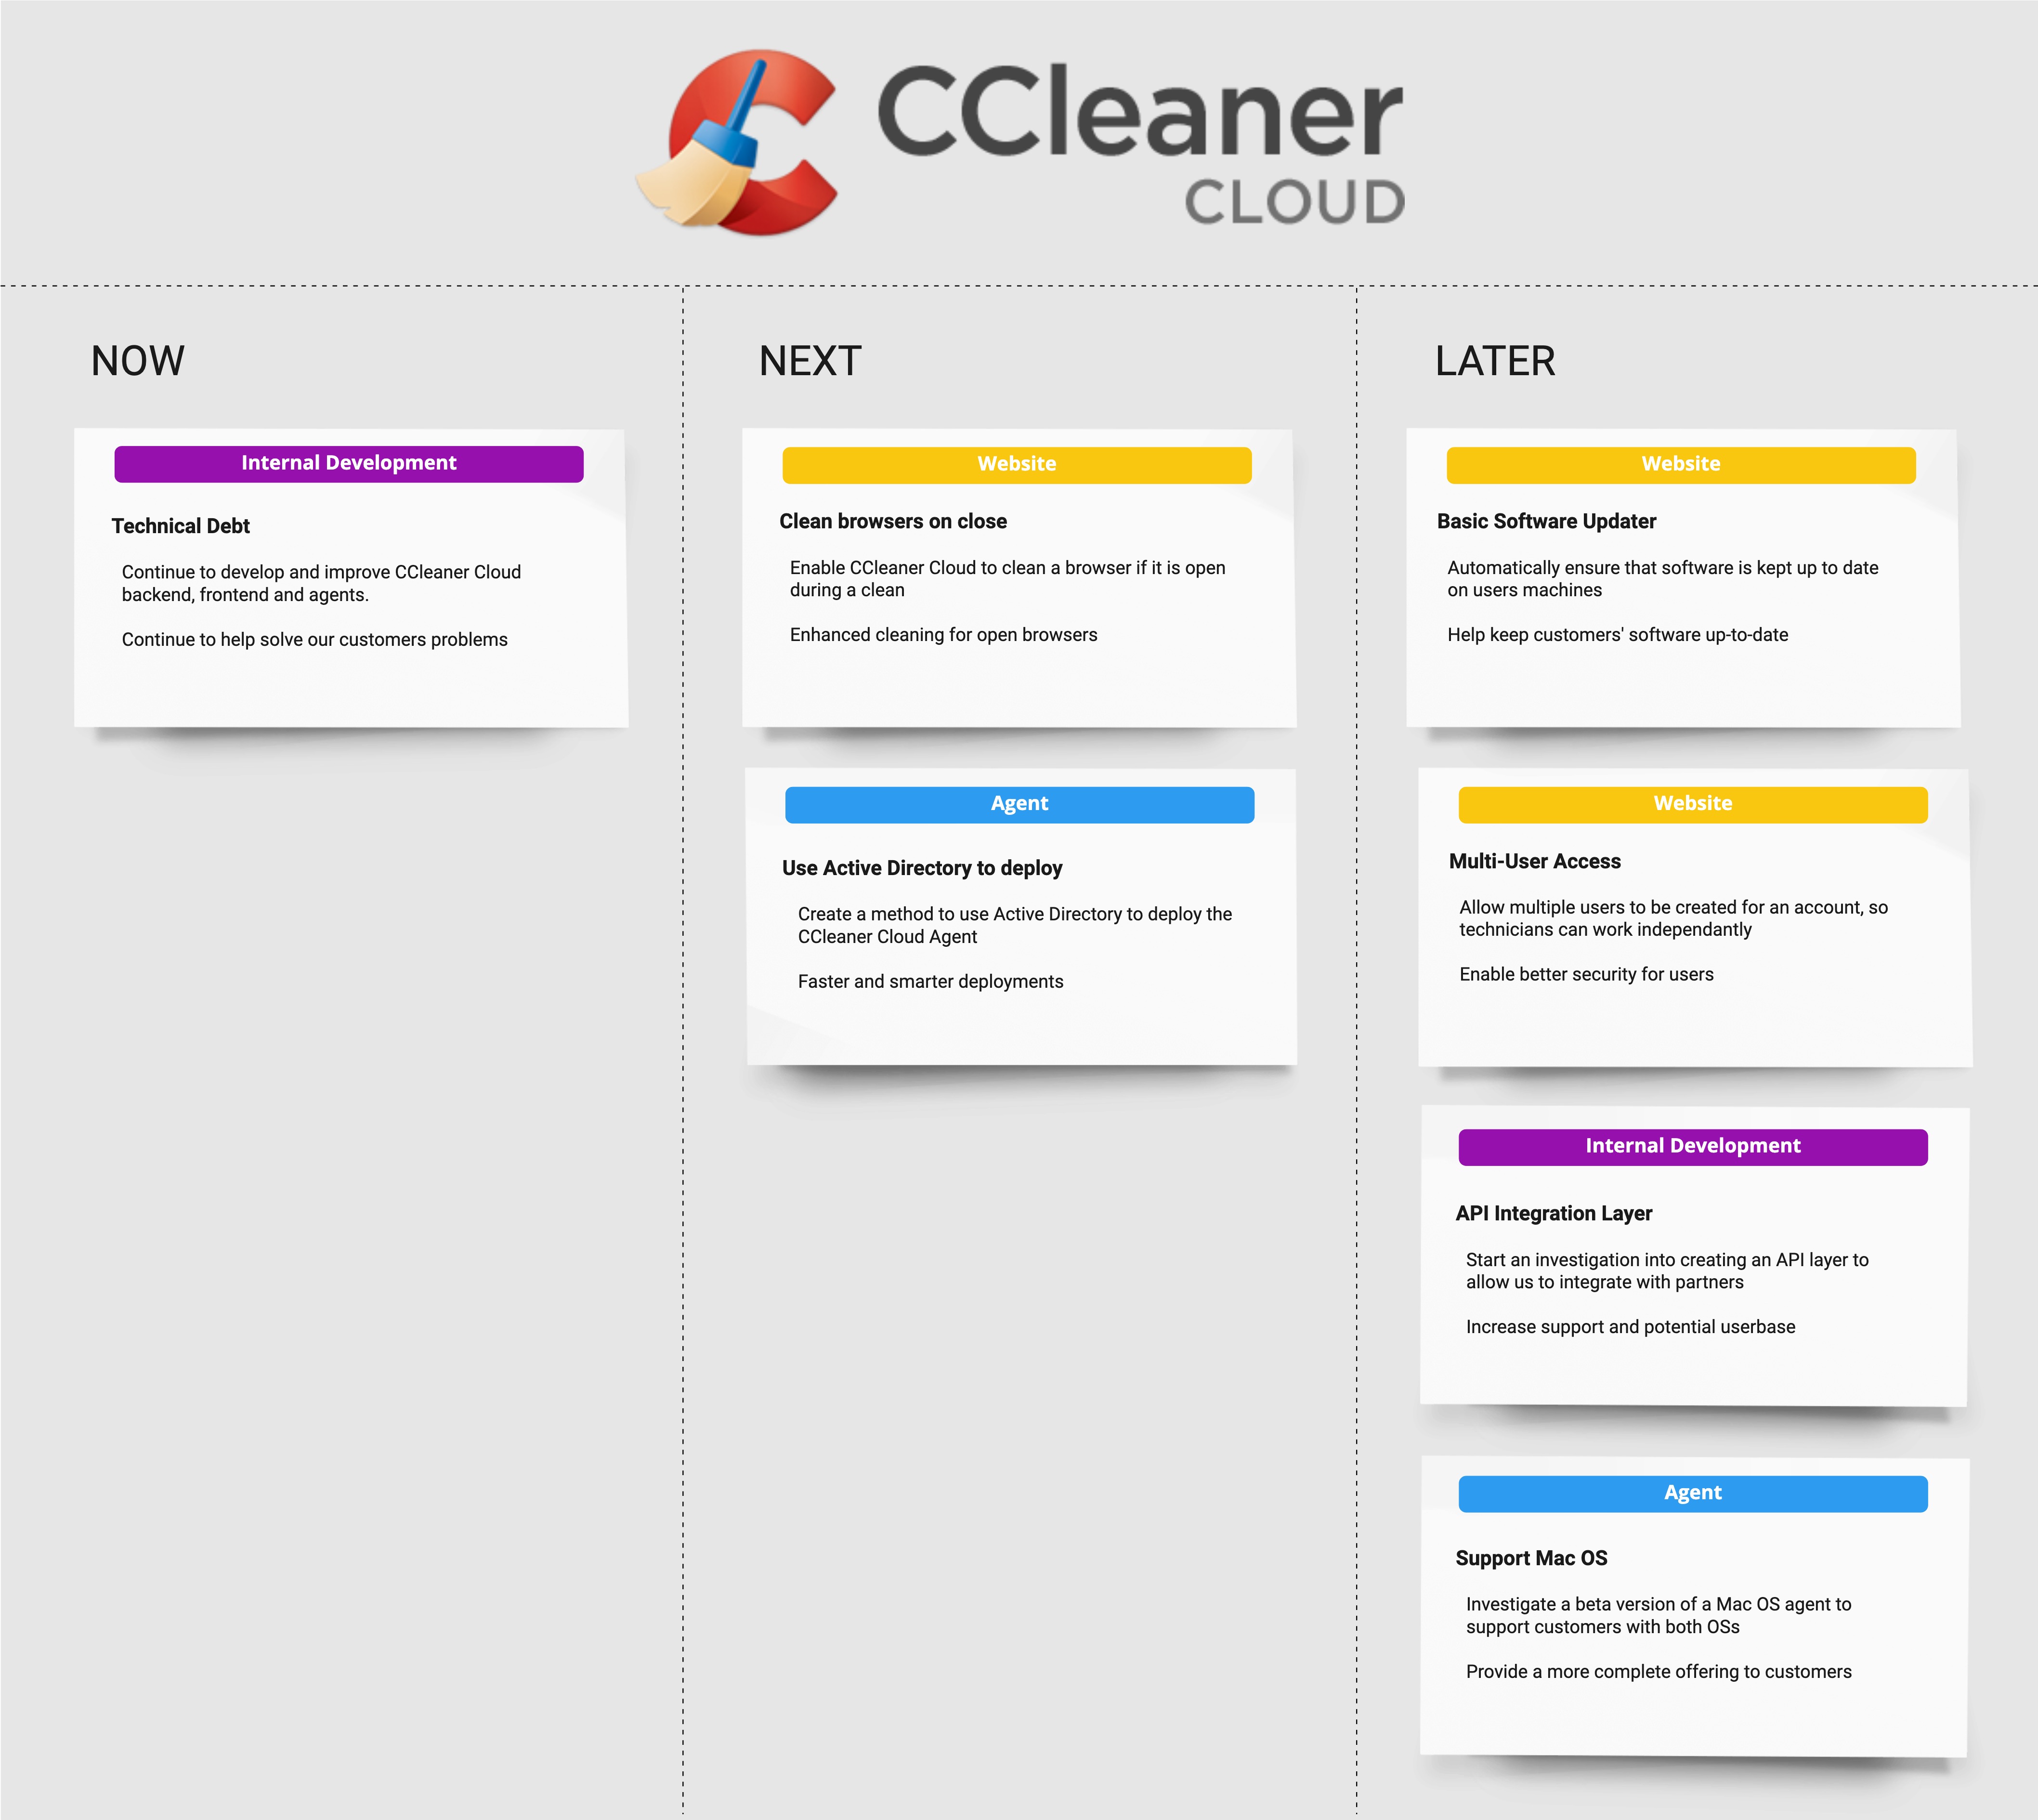 CCleaner Cloud Roadmap